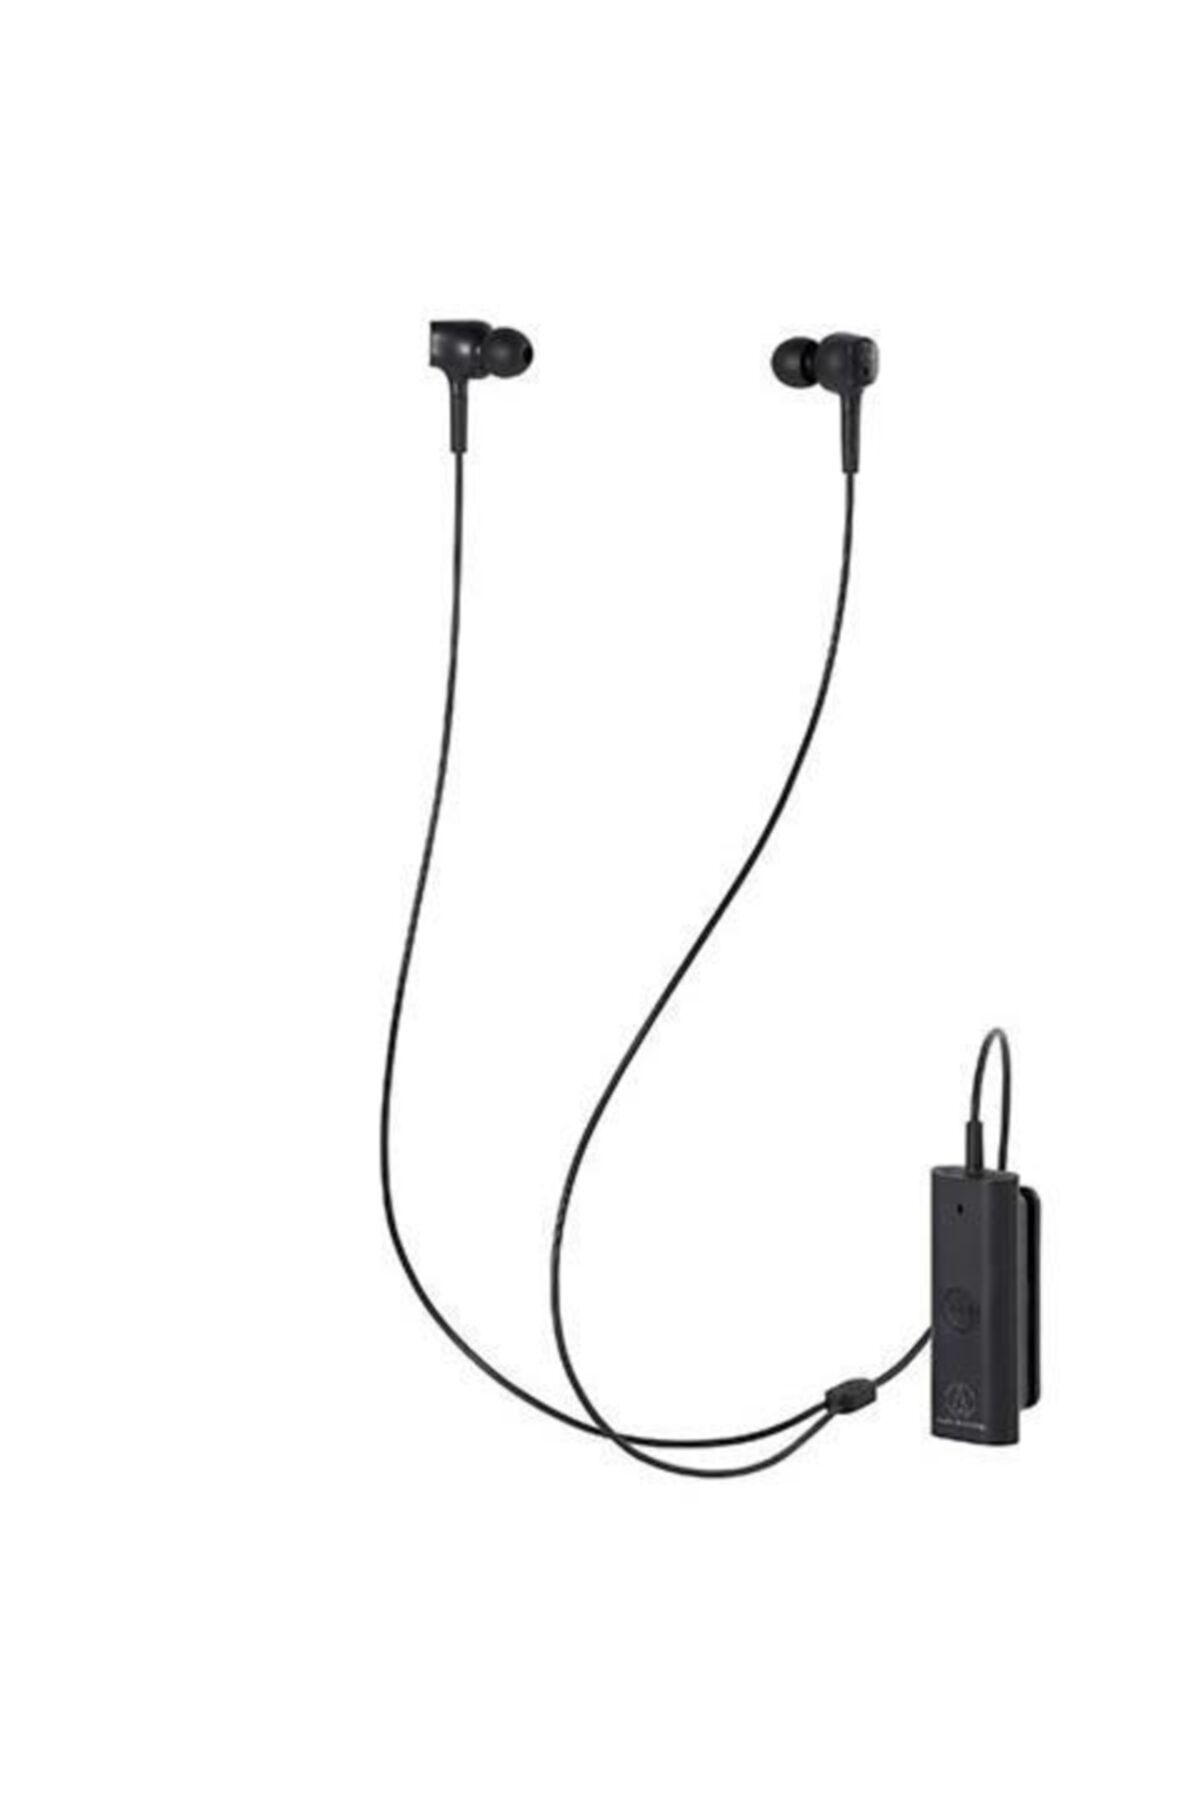 Audio Technica Ath-anc100bt Bluetooth Gürültü Engelleyici Kulakiçi Kulaklık